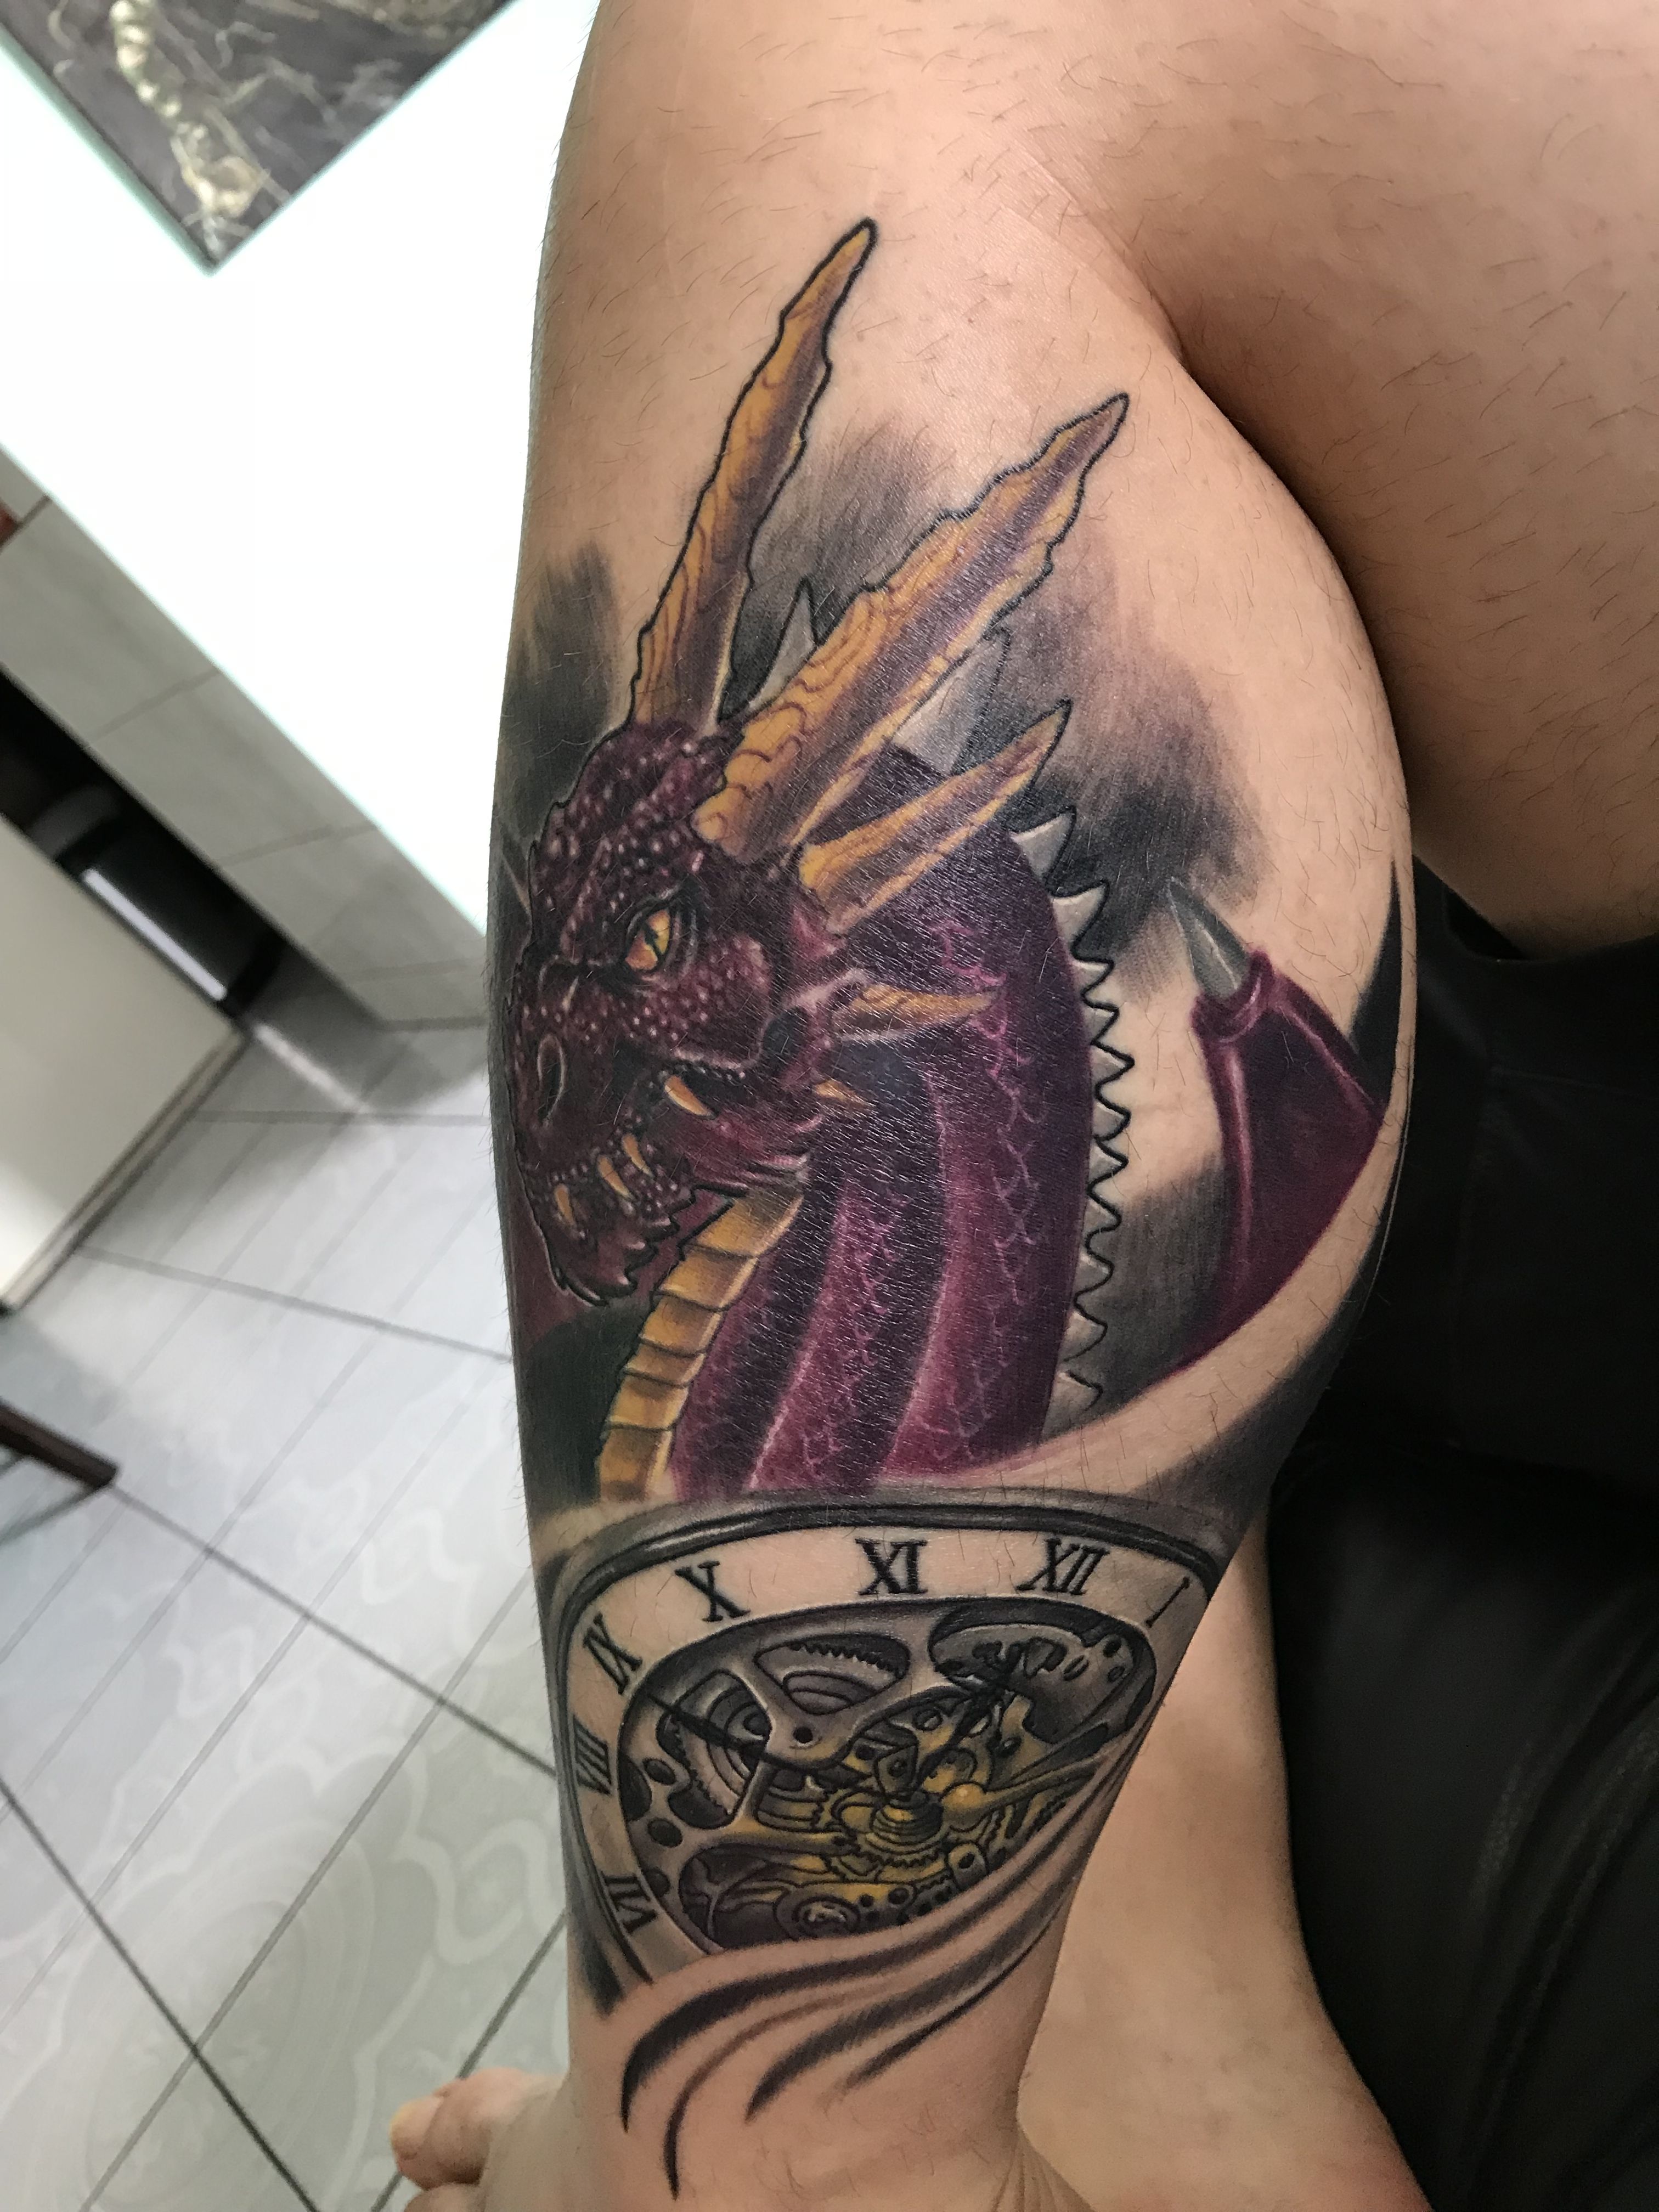 brendon macdonald recommends Puff The Magic Dragon Penis Tattoo